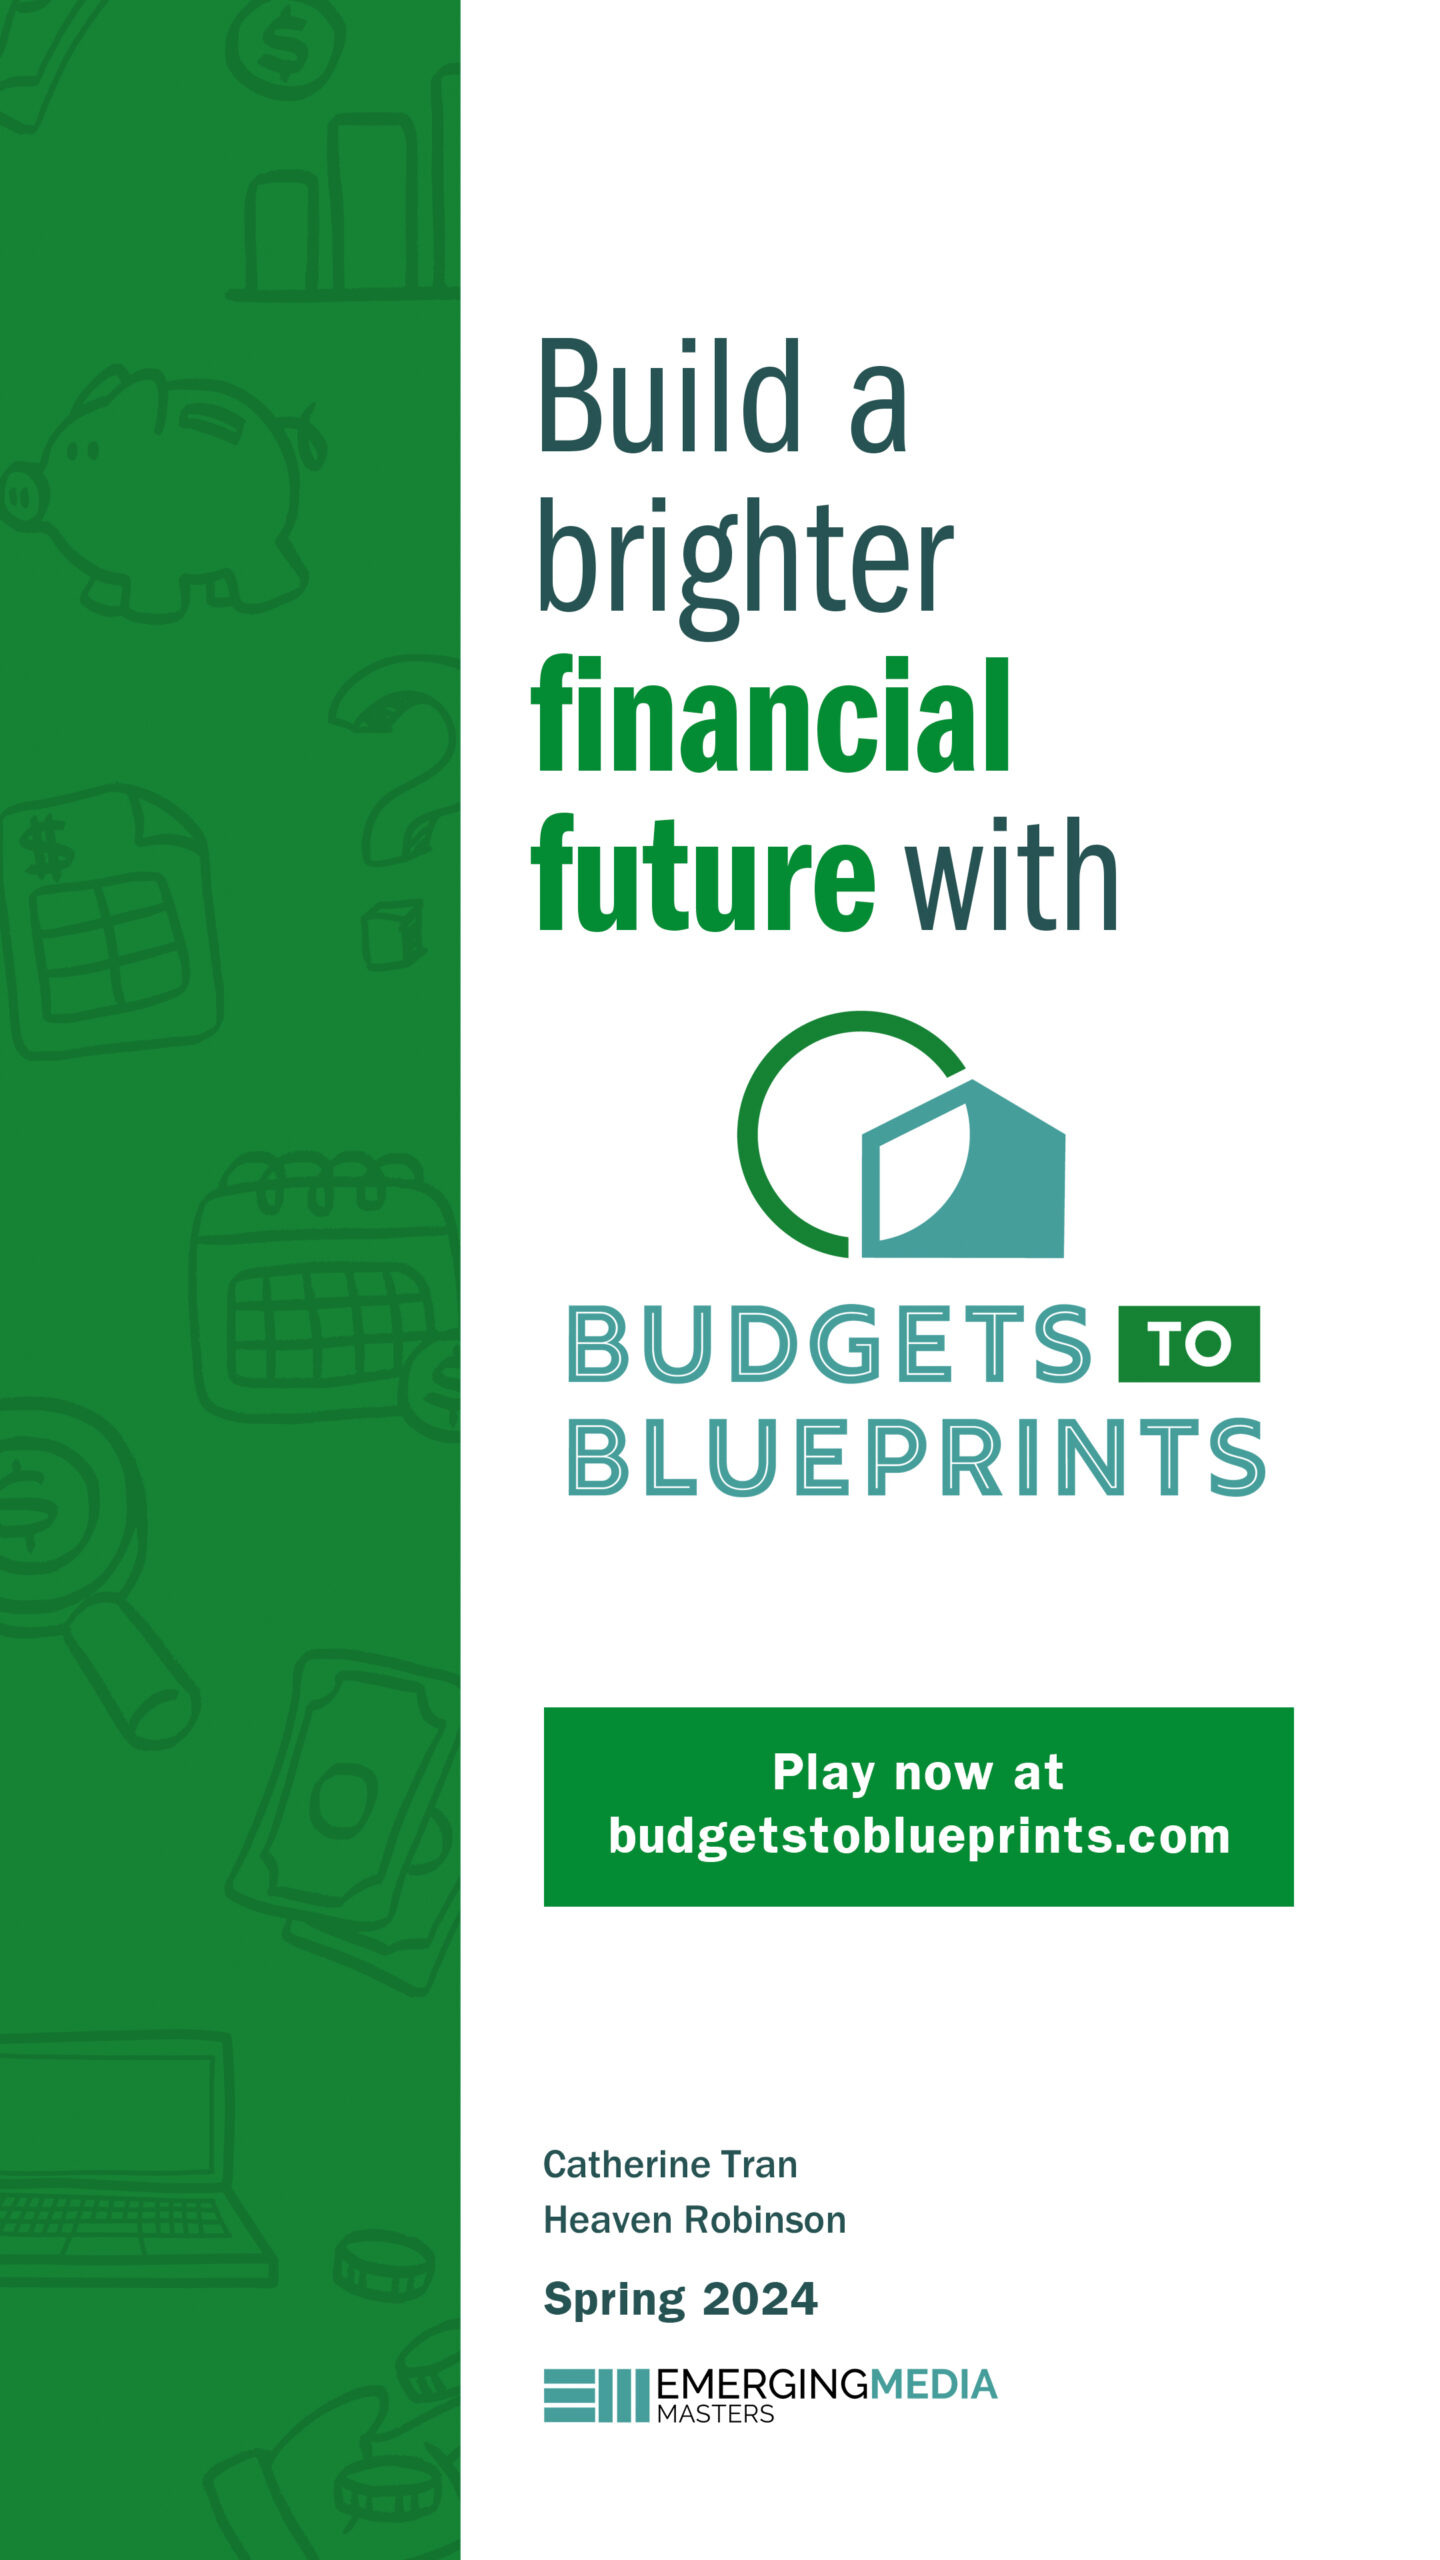 Budgets to Blueprints